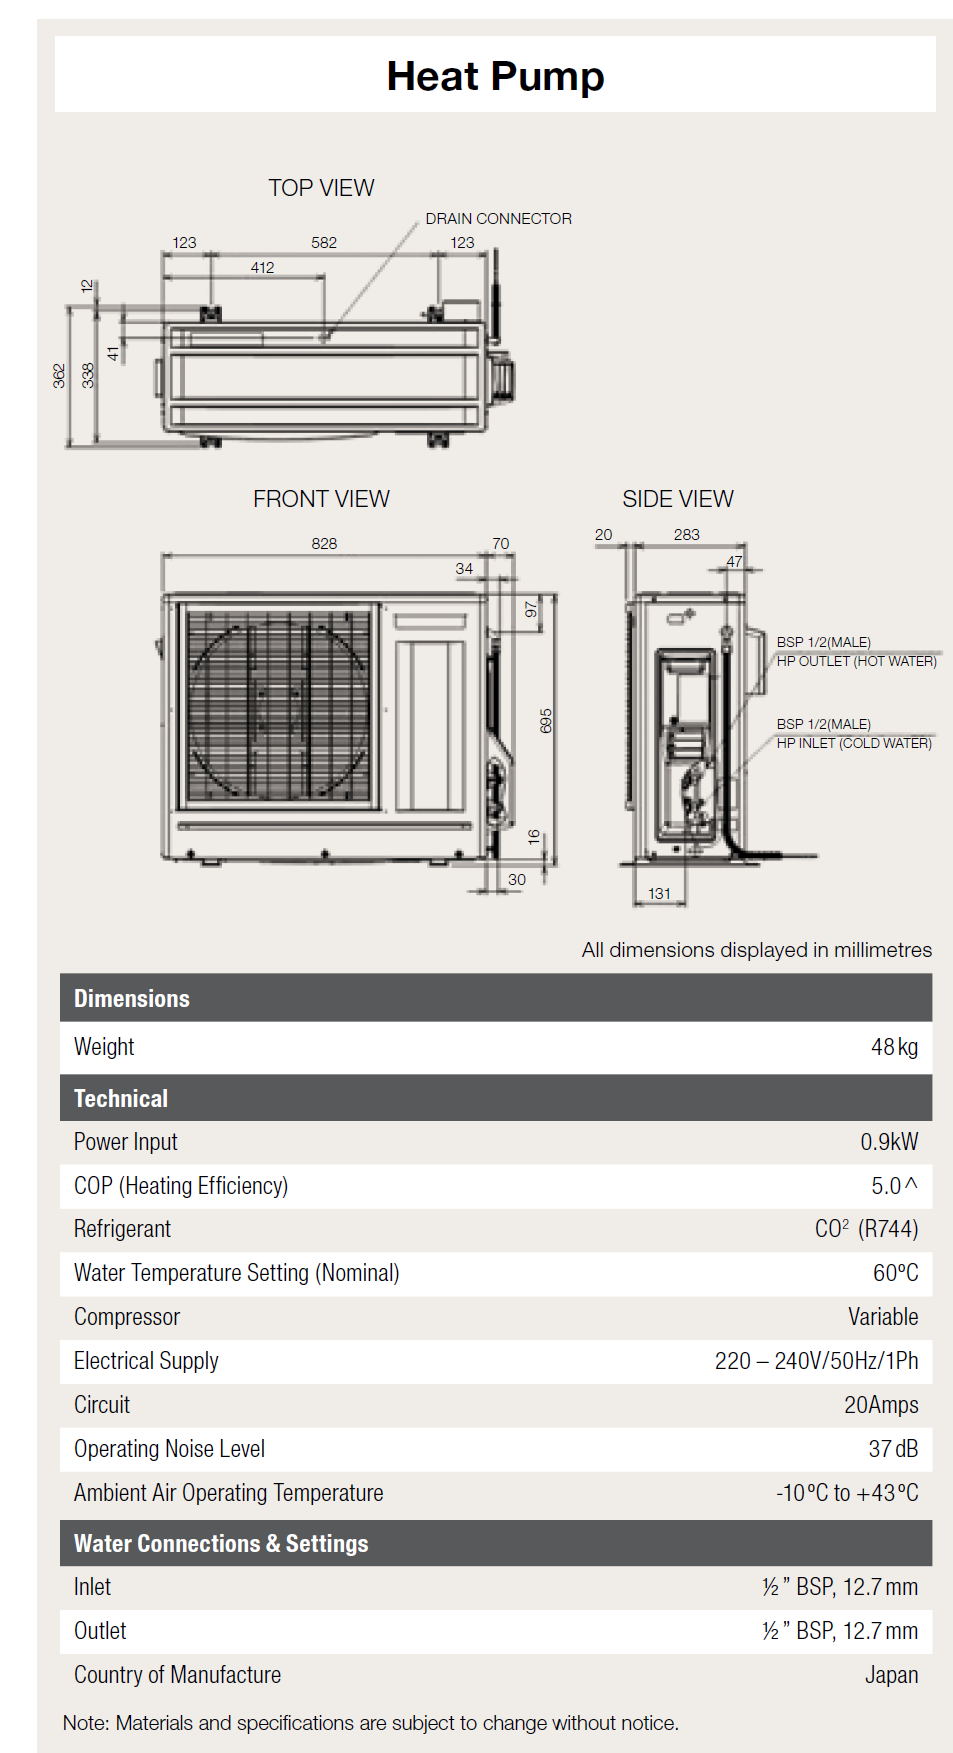 Specifications for Sanden Heat Pump Unit G3 Model